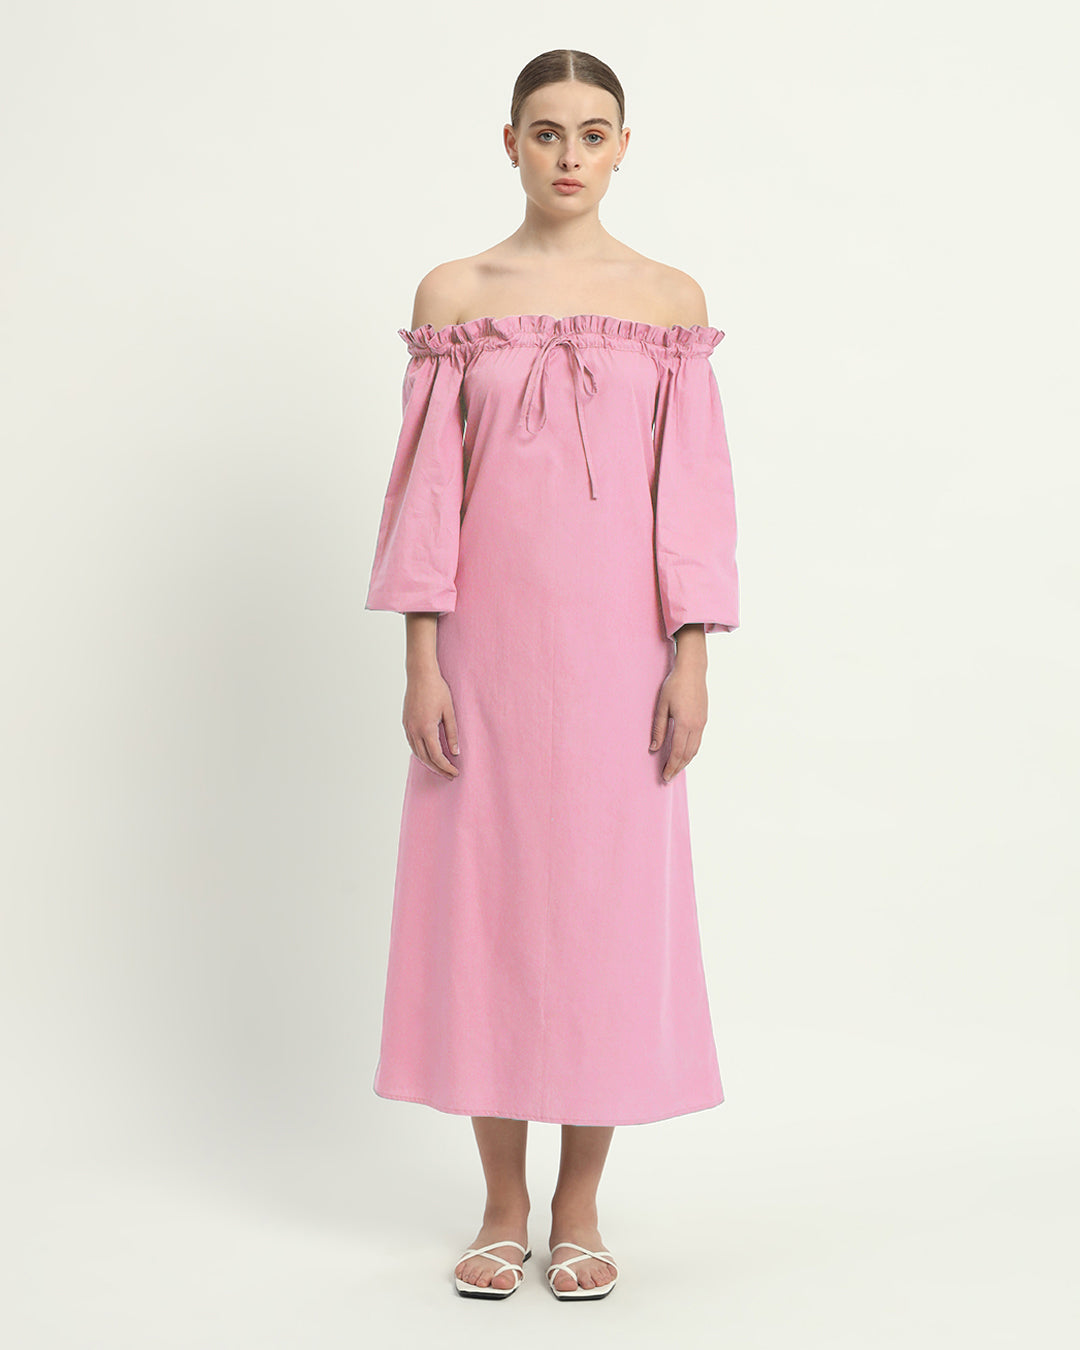 The Fondant Pink Carlisle Cotton Dress